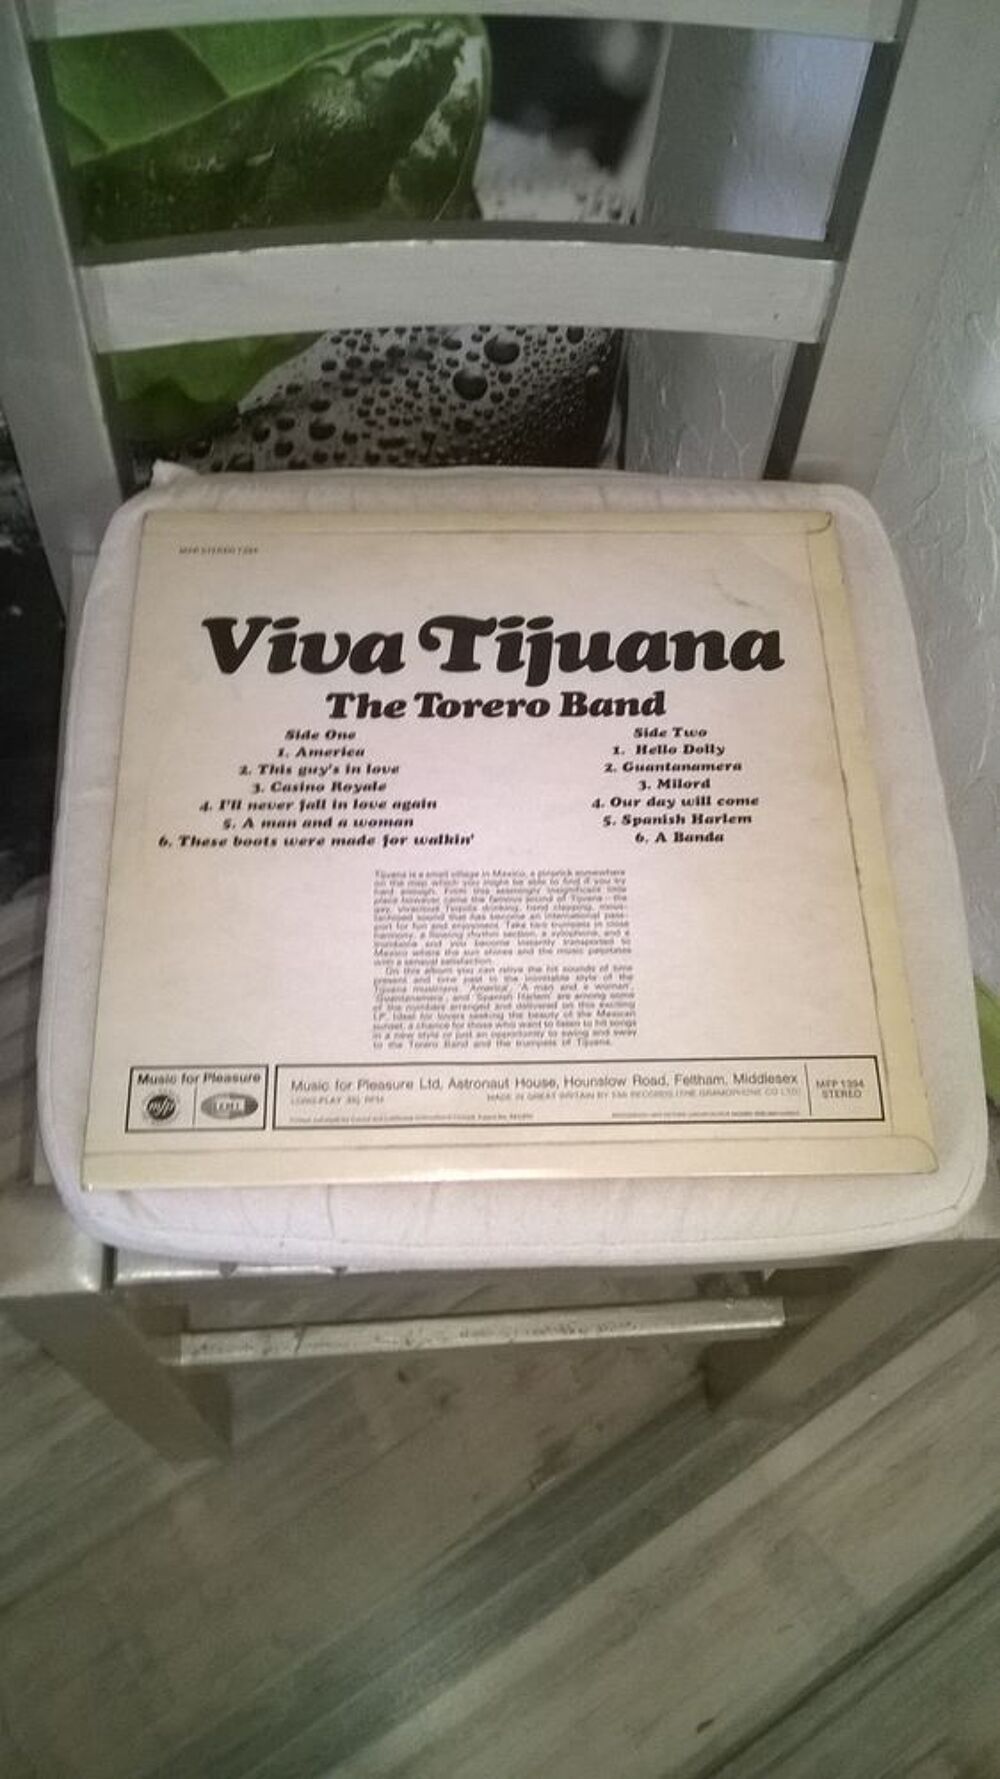 Vinyle The Torero Band
Viva Tijuana!
1970
Excellent etat
CD et vinyles